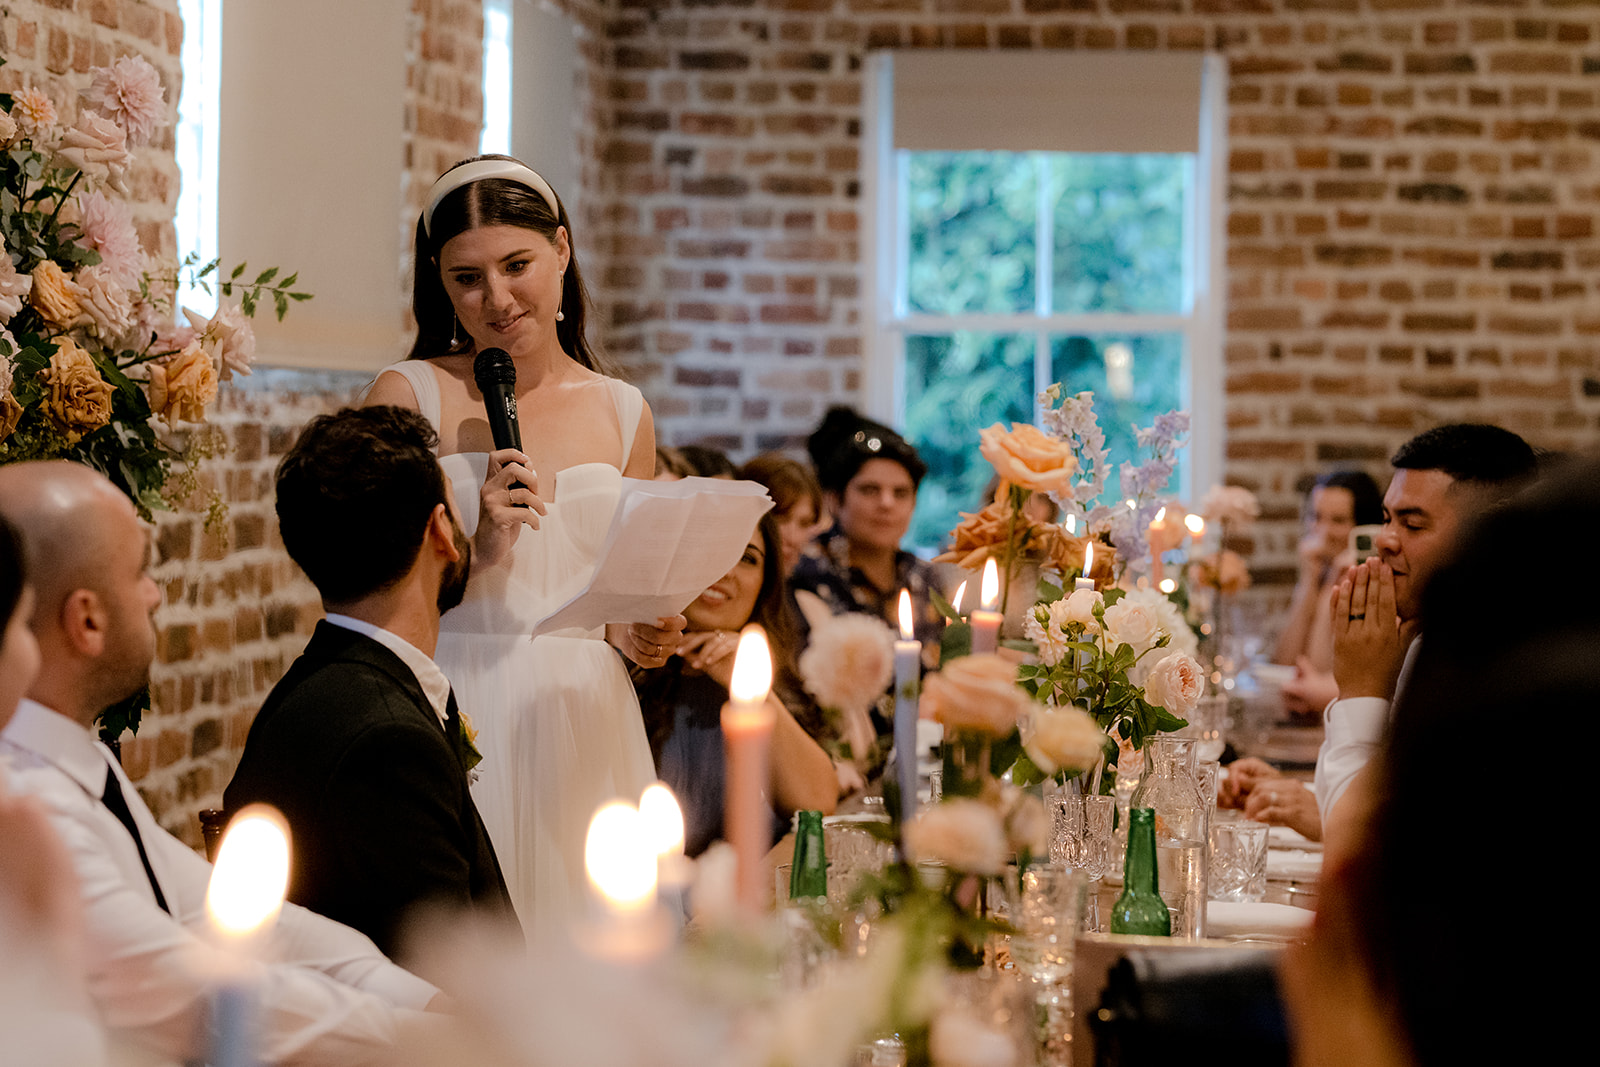 Bride making speech at her elegant country wedding reception.